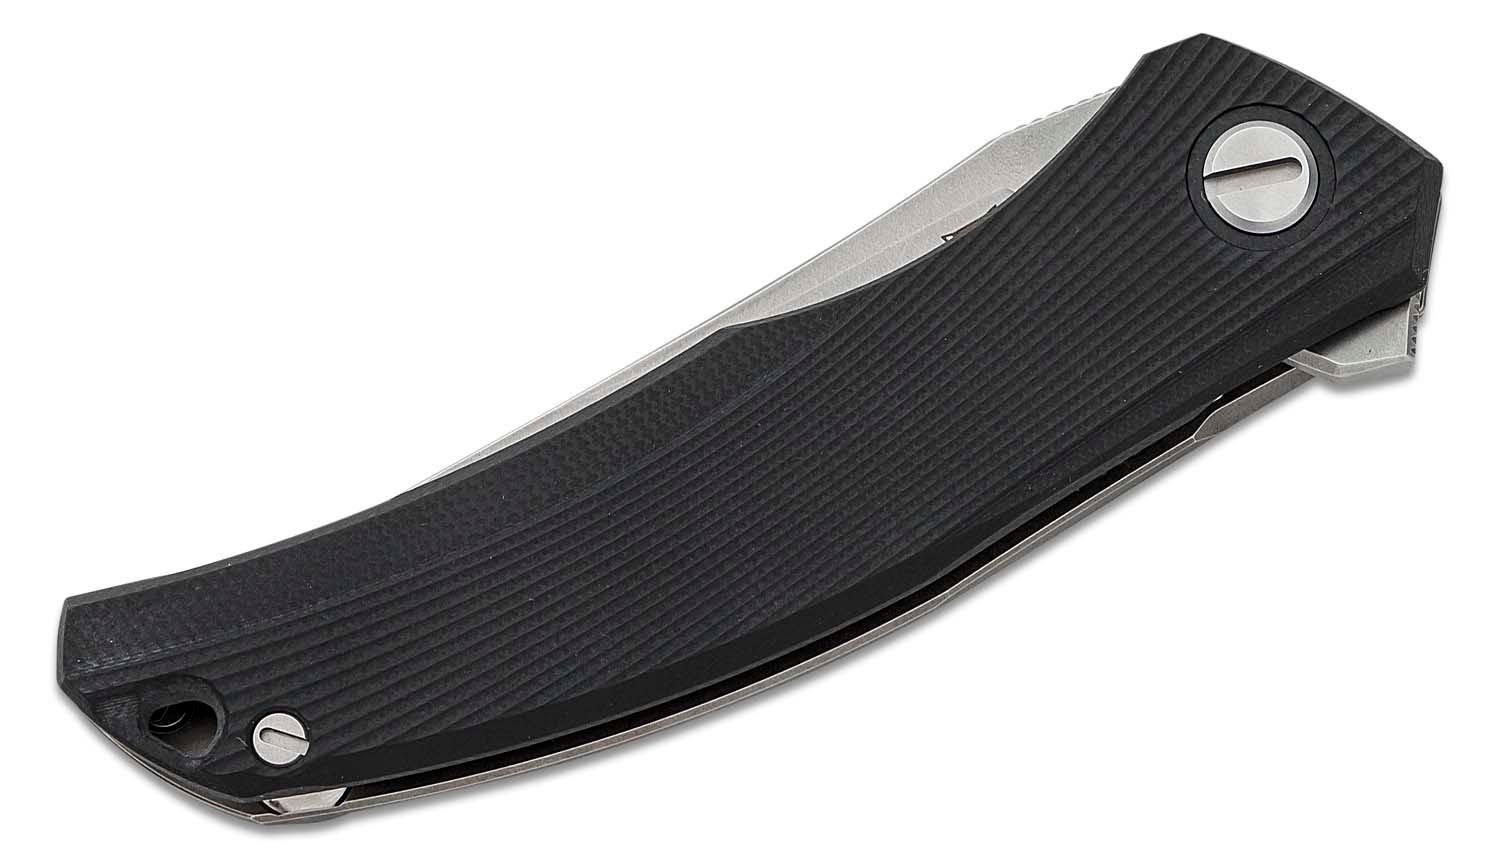 curved-paring-knife-7-cm-blackus